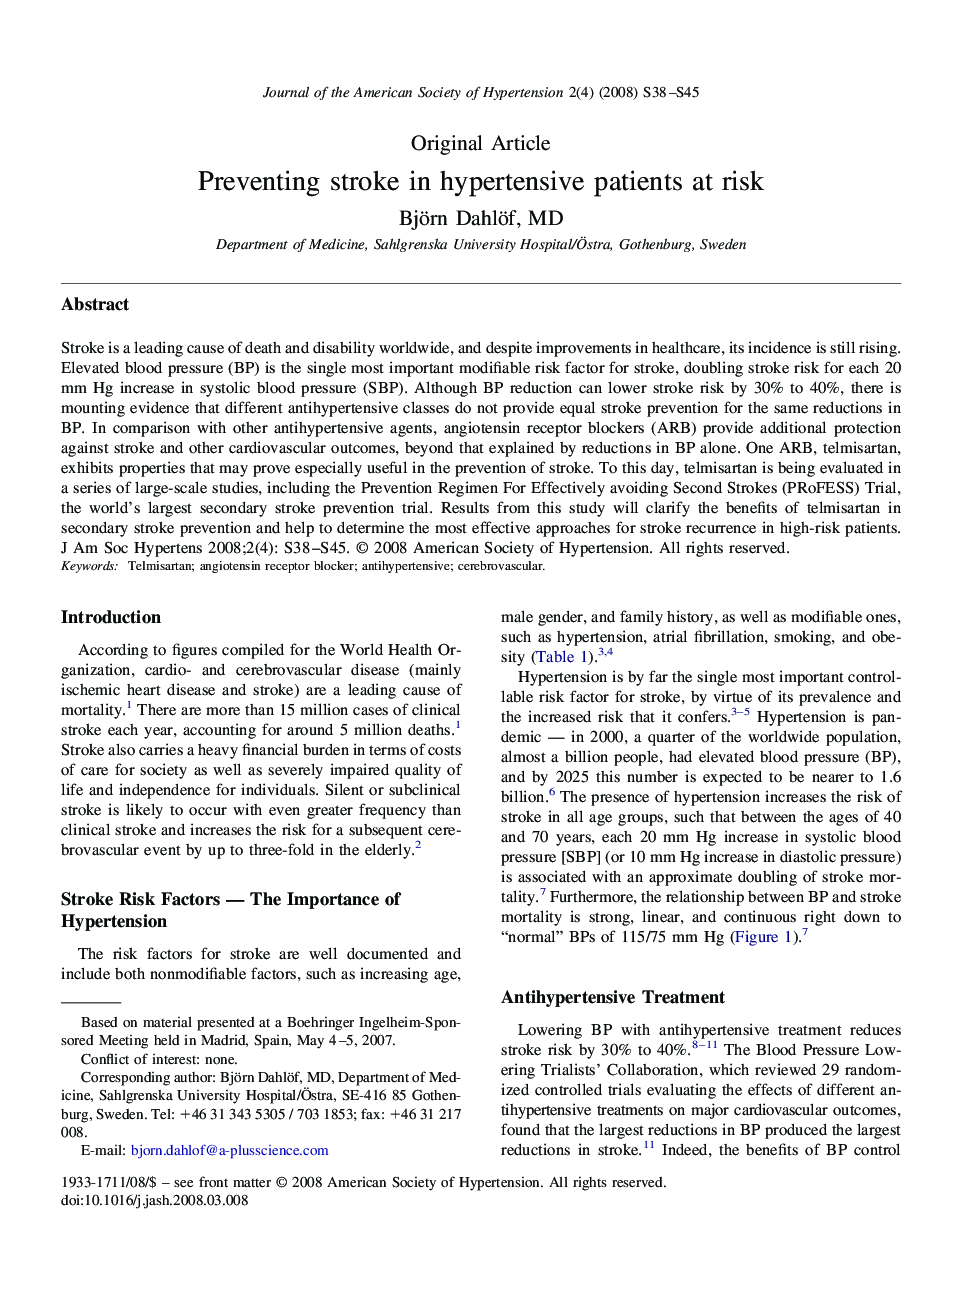 Preventing stroke in hypertensive patients at risk 